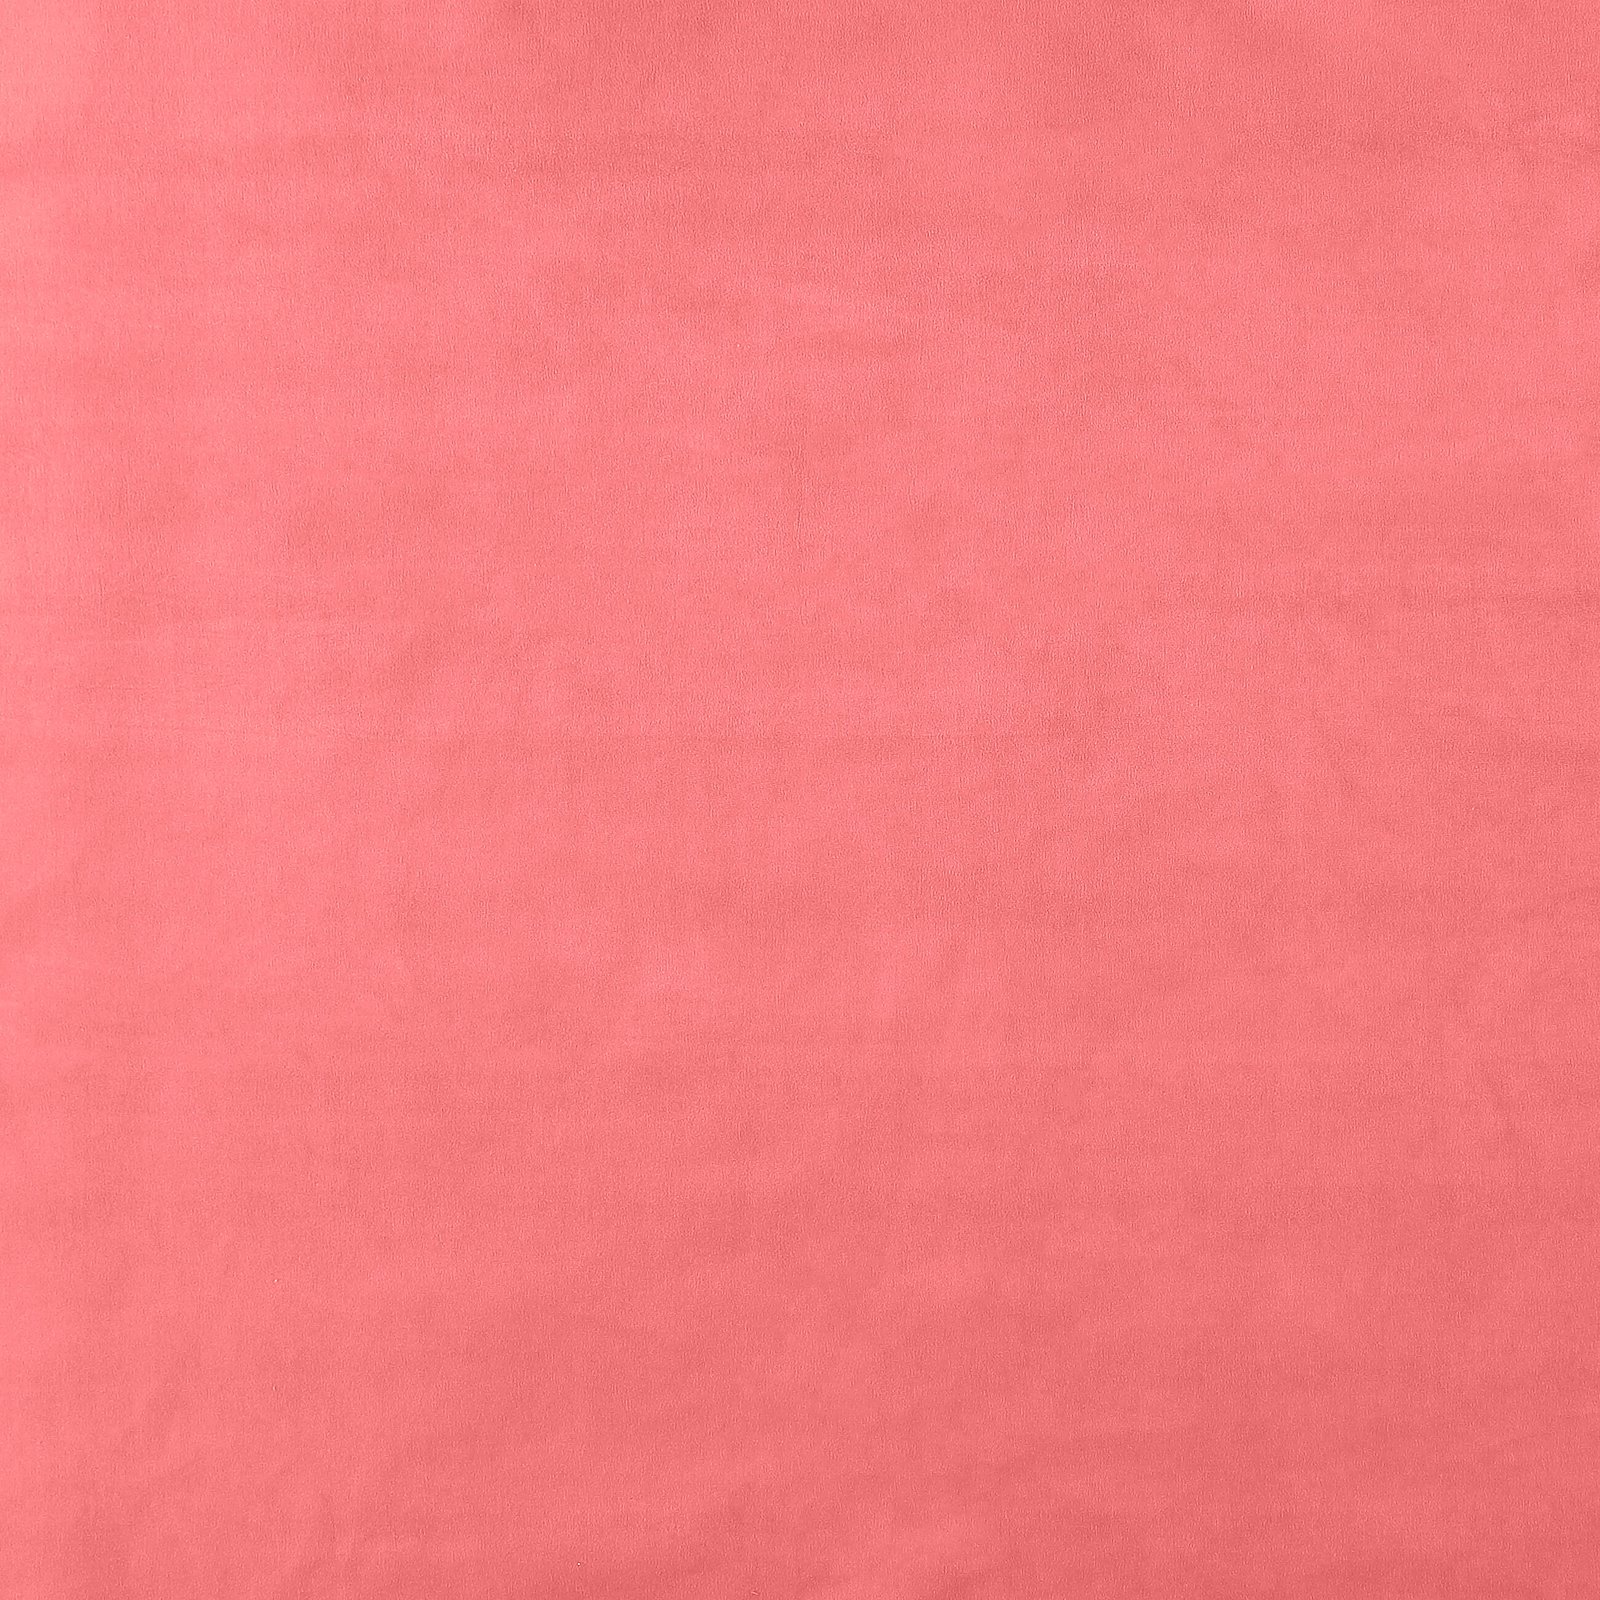 Möbel Velours dunkel staubig rosa 826258_pack_solid